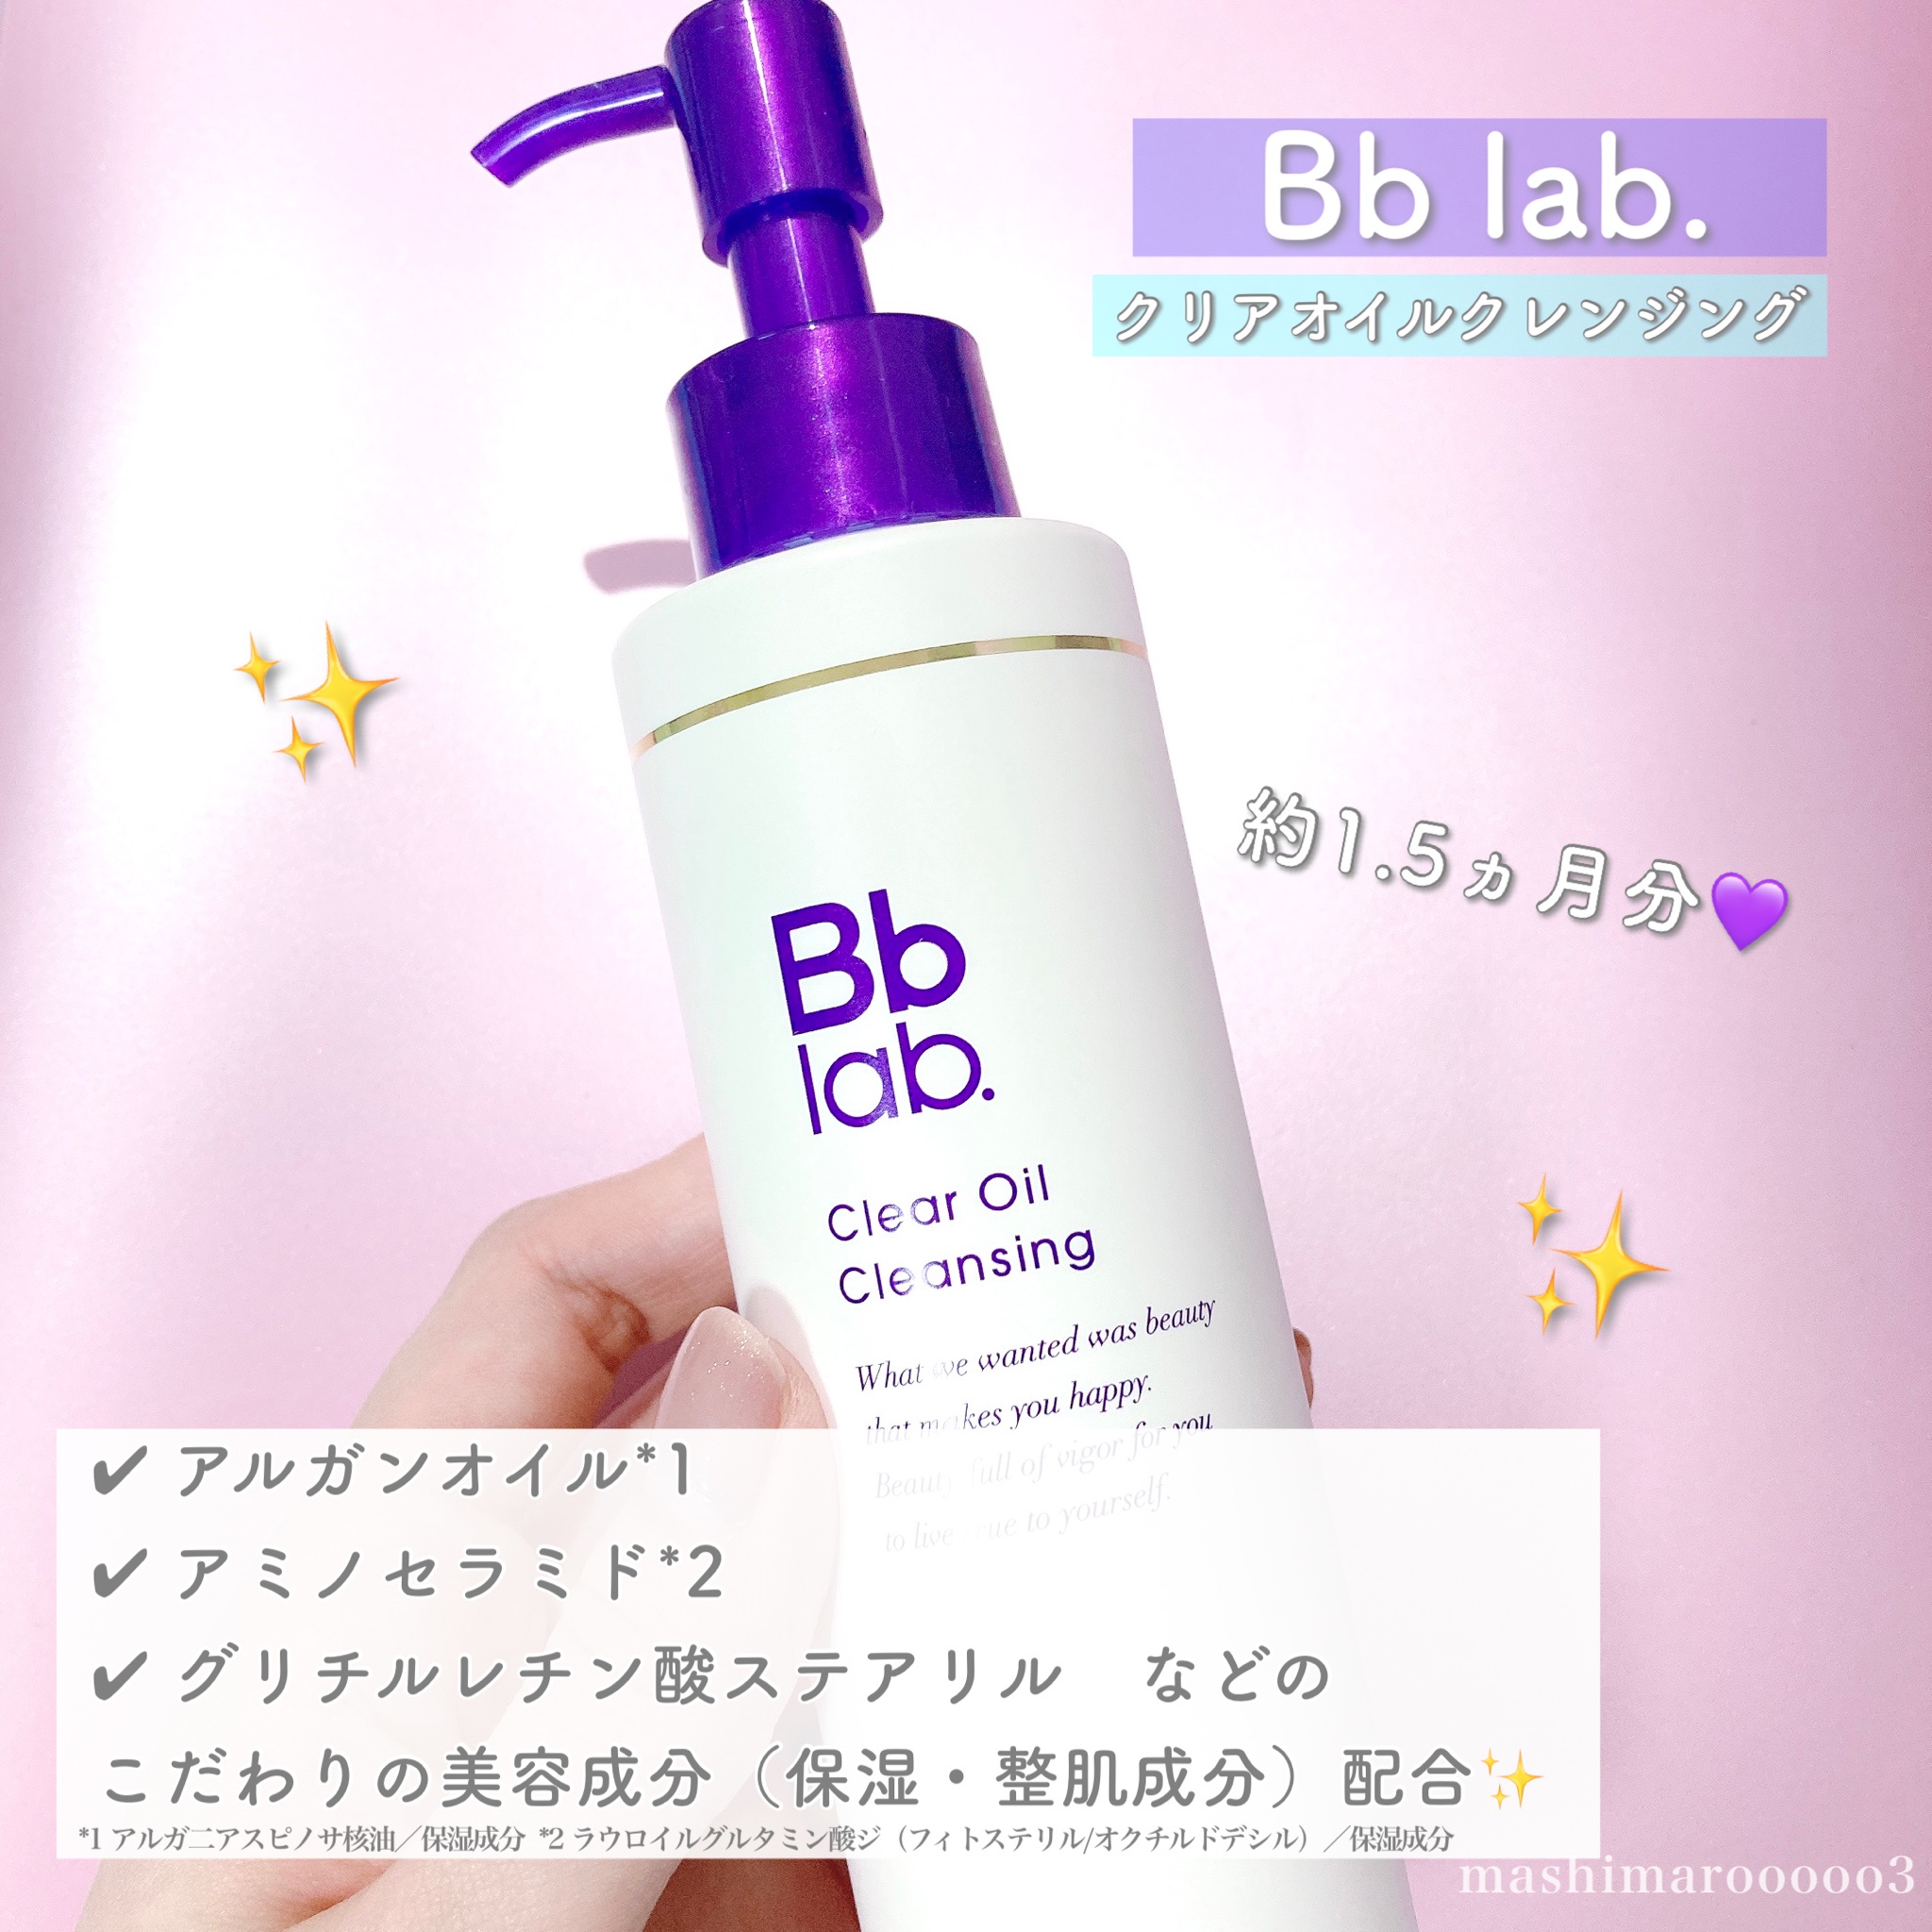 bb laboratories モイスチャー クレンジング バーム - 基礎化粧品